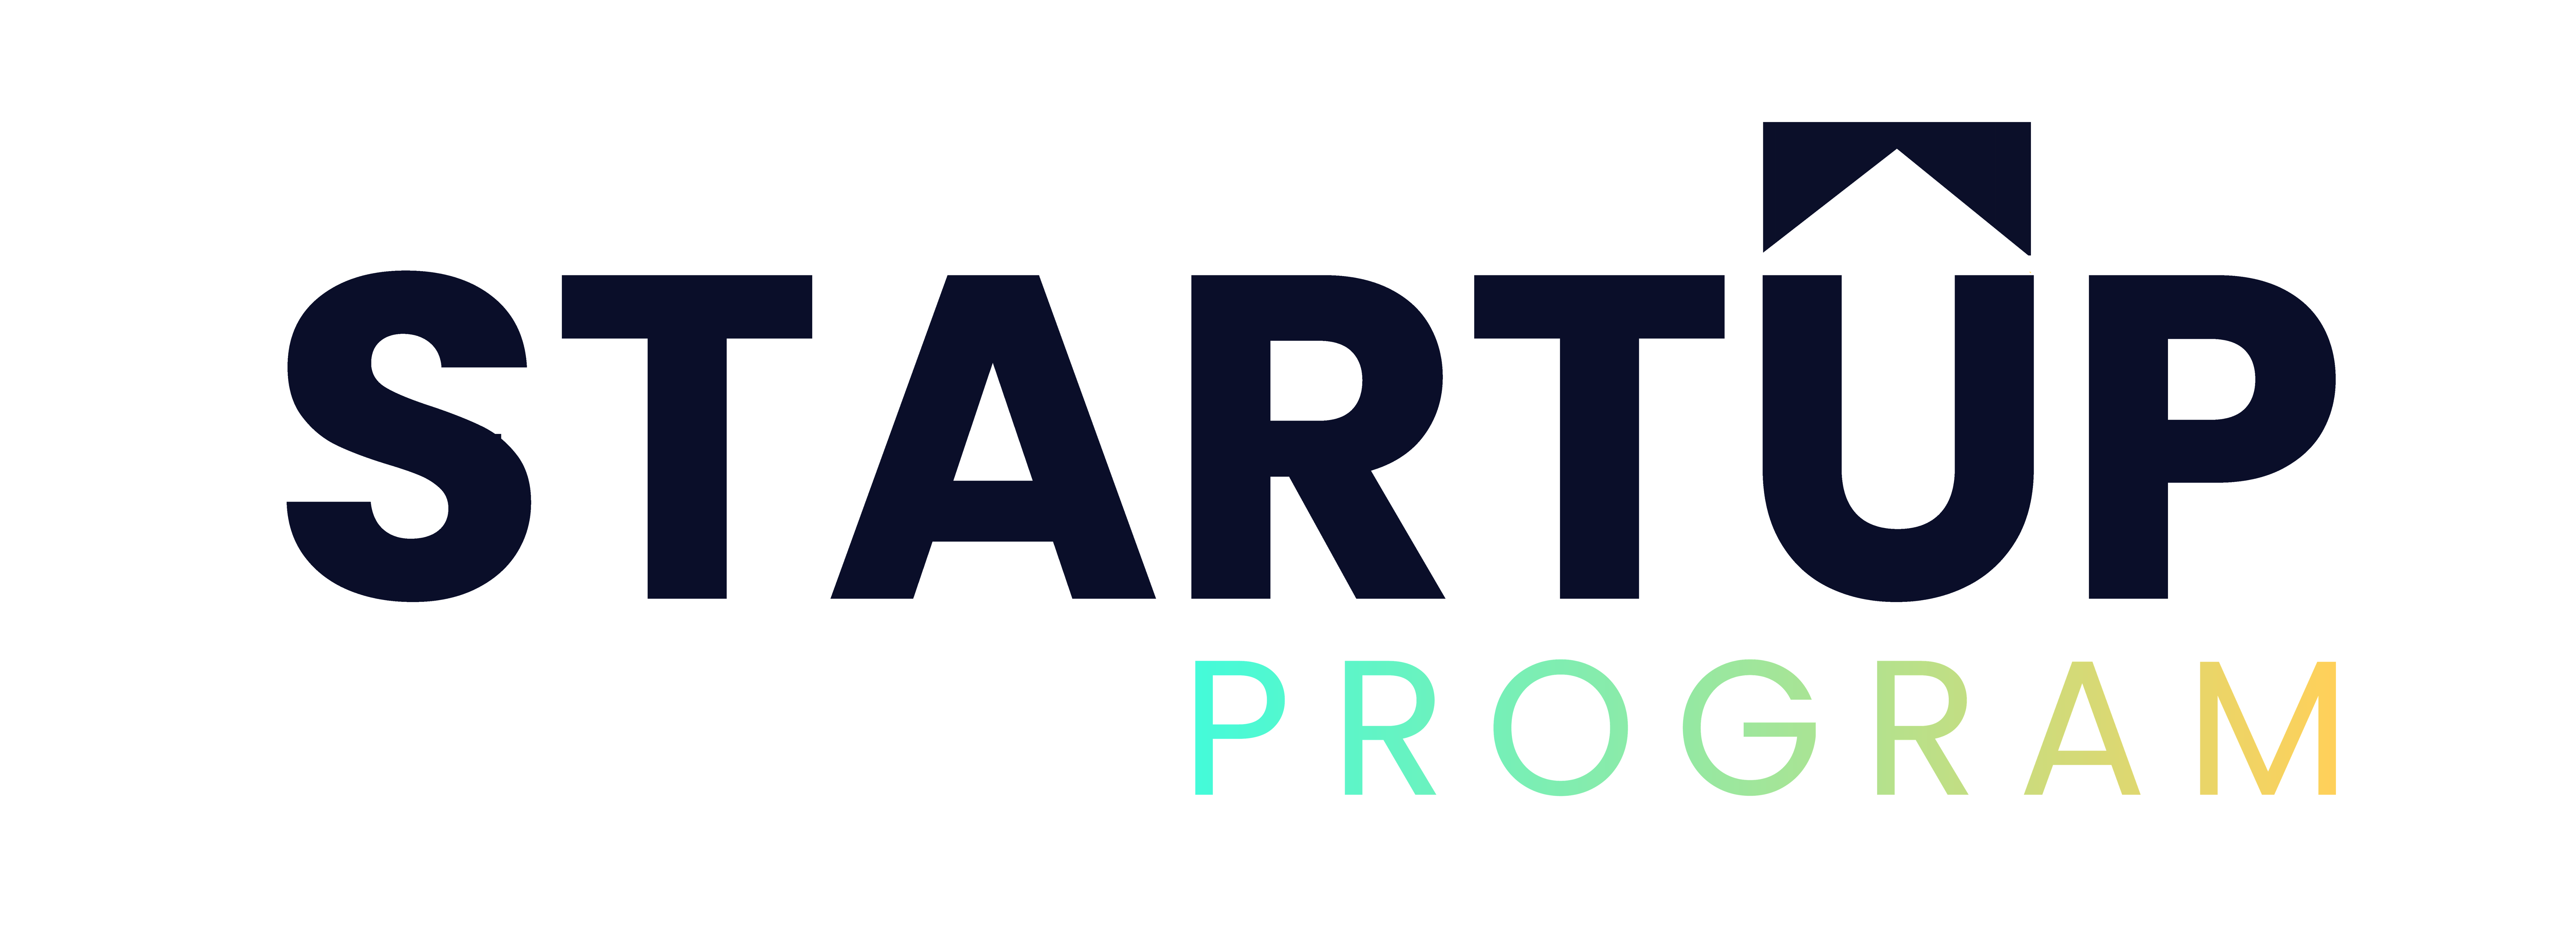 Startup program logo